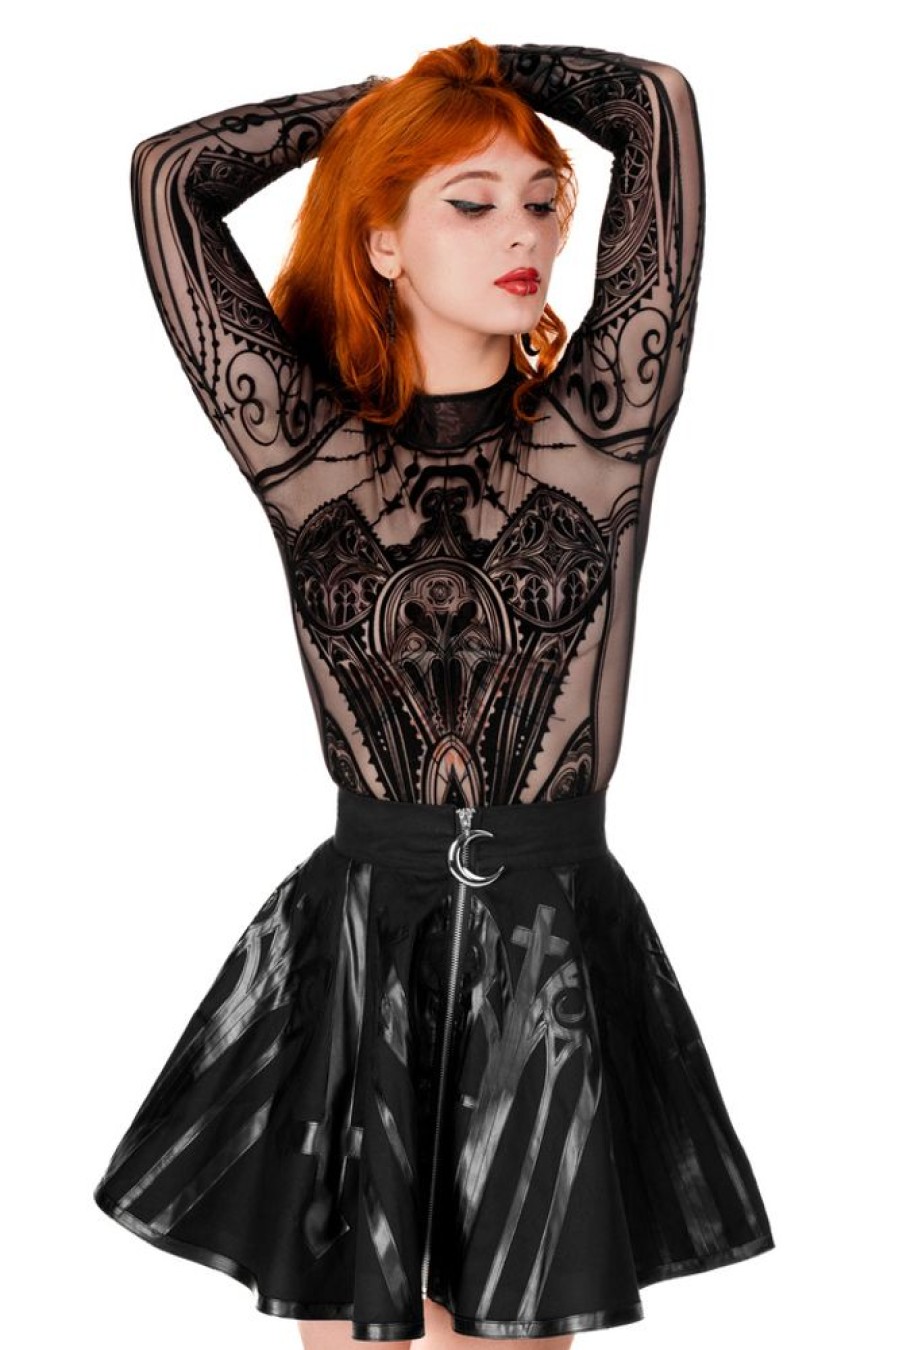 Black gothic leggings with Ram skull and pentagram SATANIC LEGGINGS -  Restyle